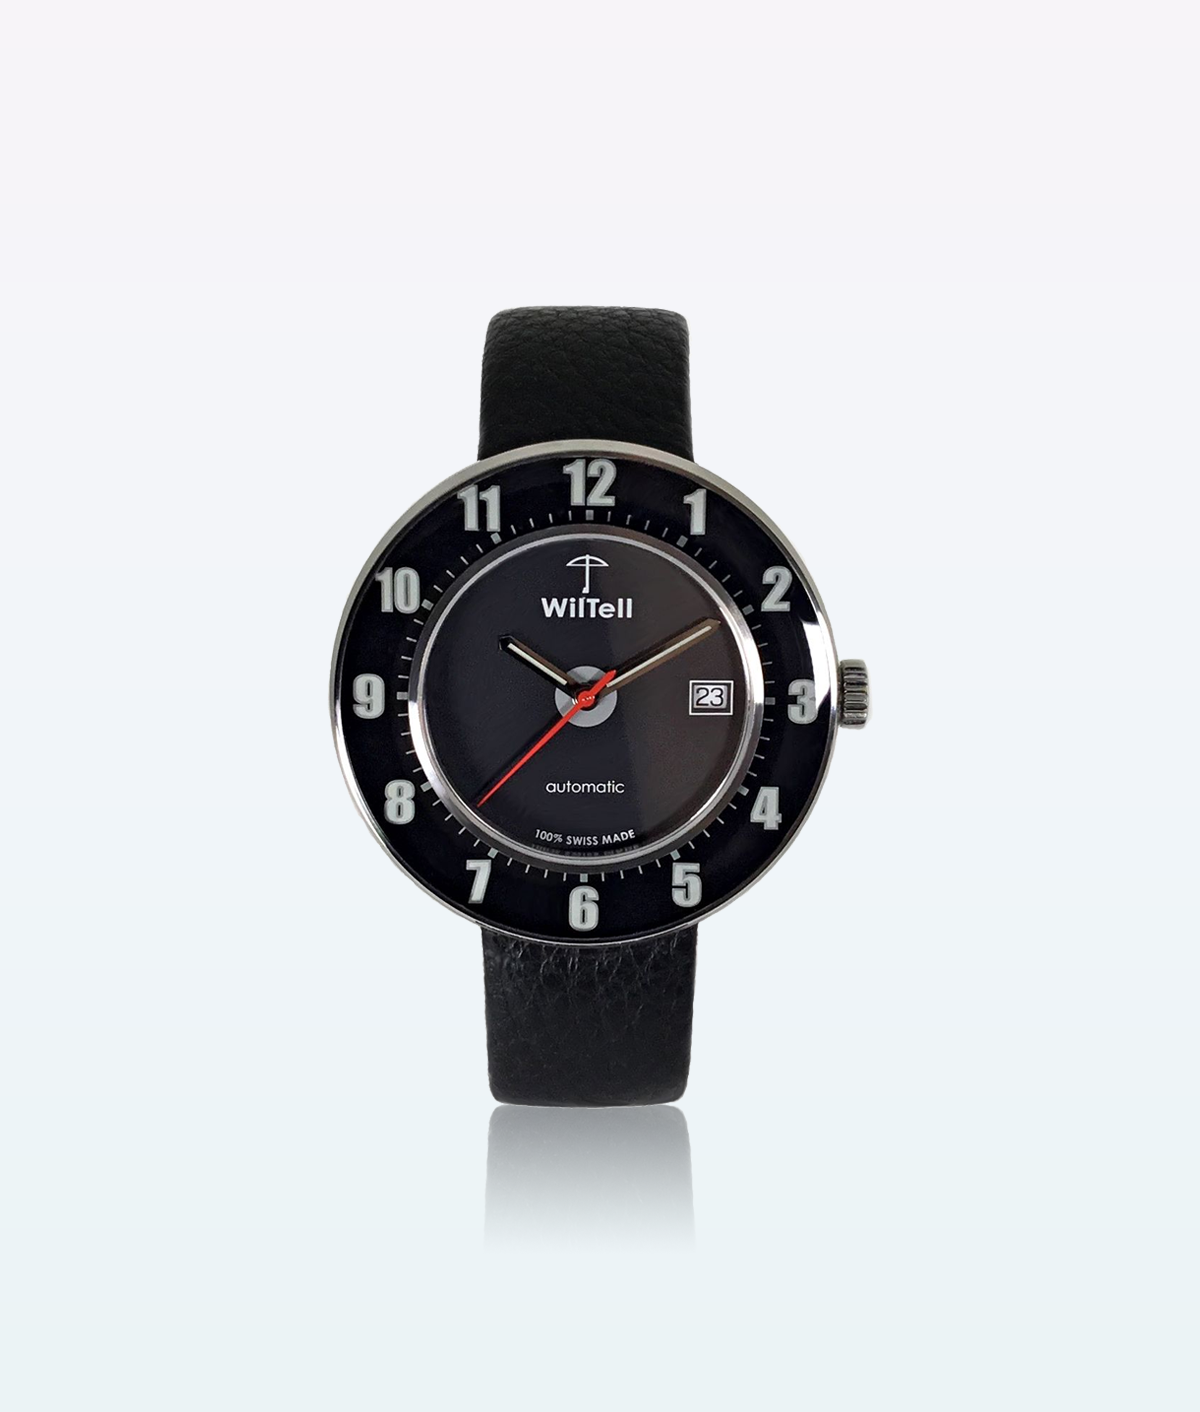 WilTell 100 Swiss Wrist Watch Black